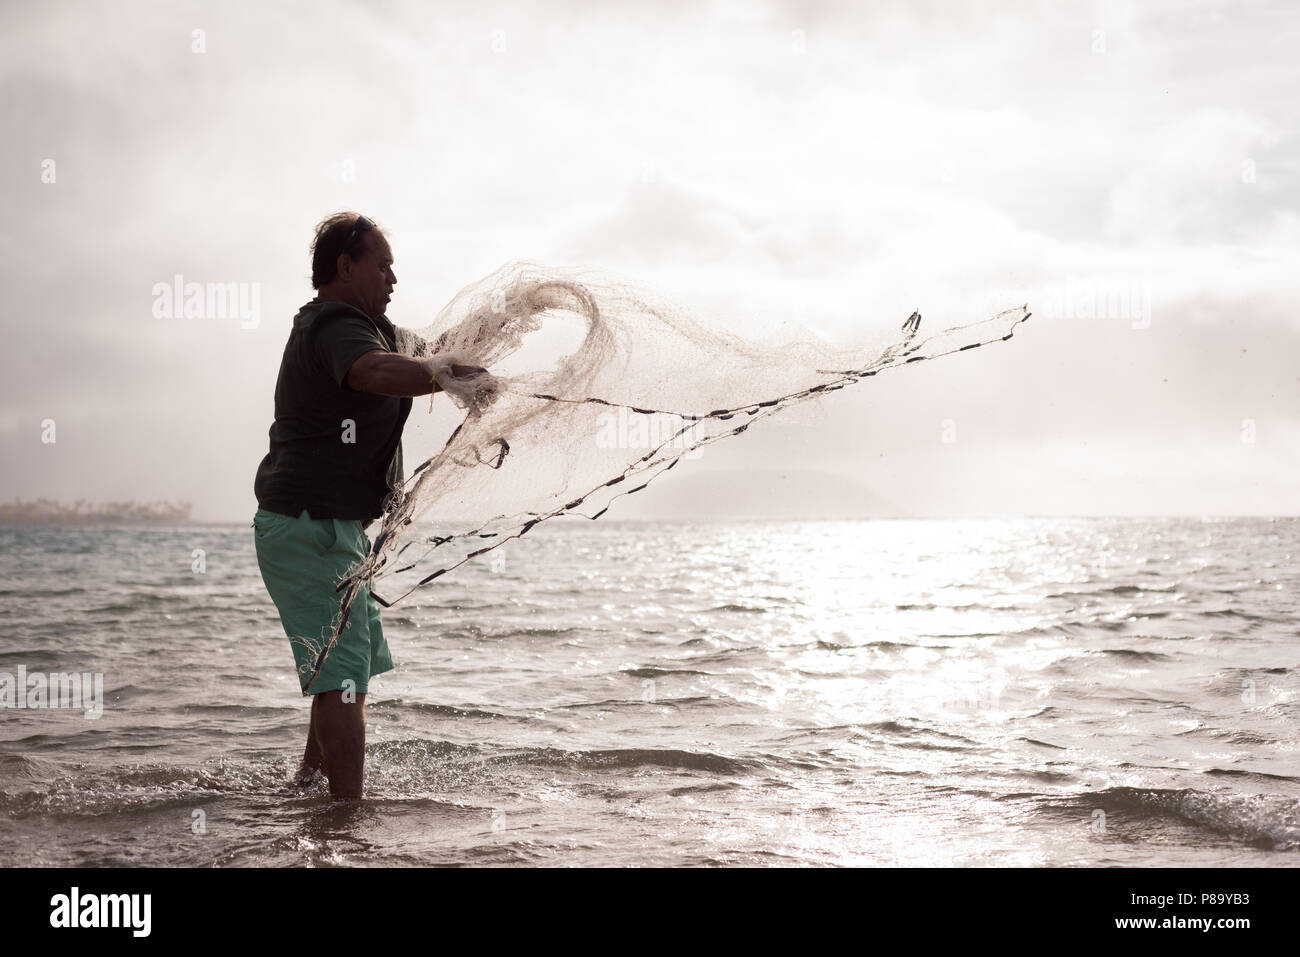 Fisherman preparing to throw cast net Stock Photo - Alamy